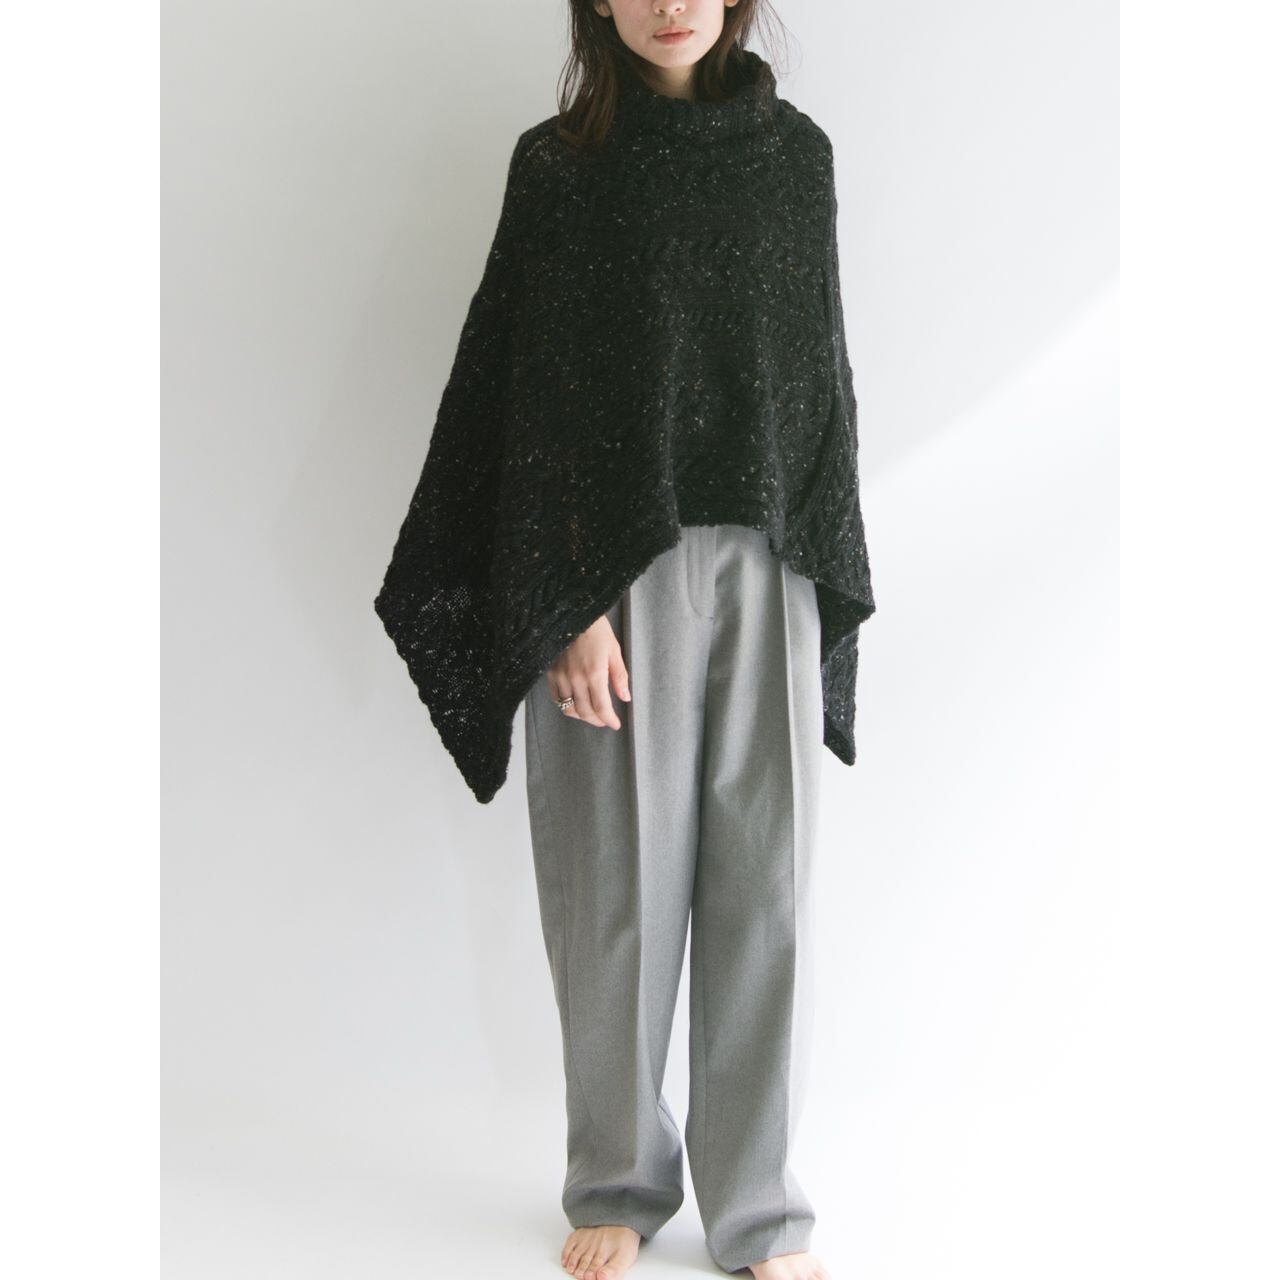 Made in Ireland】100% merino wool asymmetric knit poncho